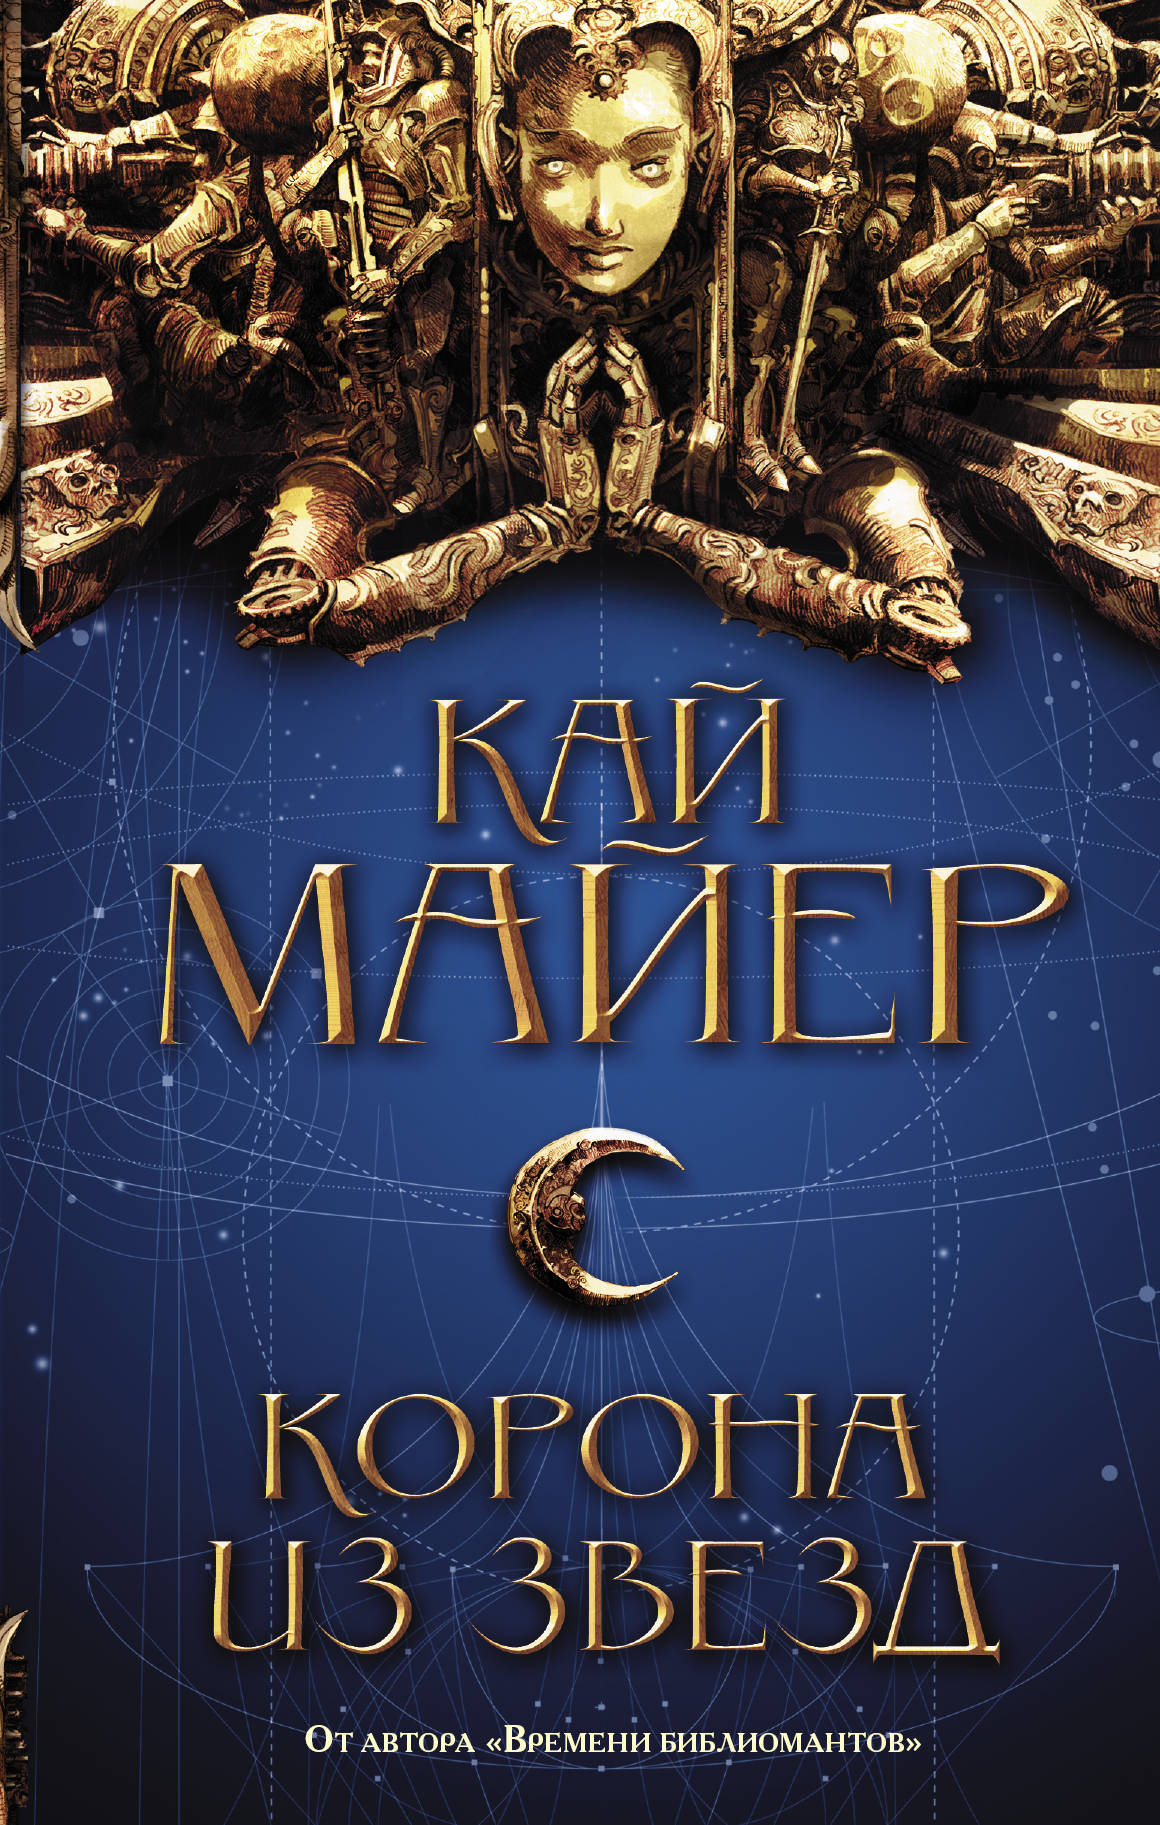 Book “Корона из звёзд” by Кай Майер